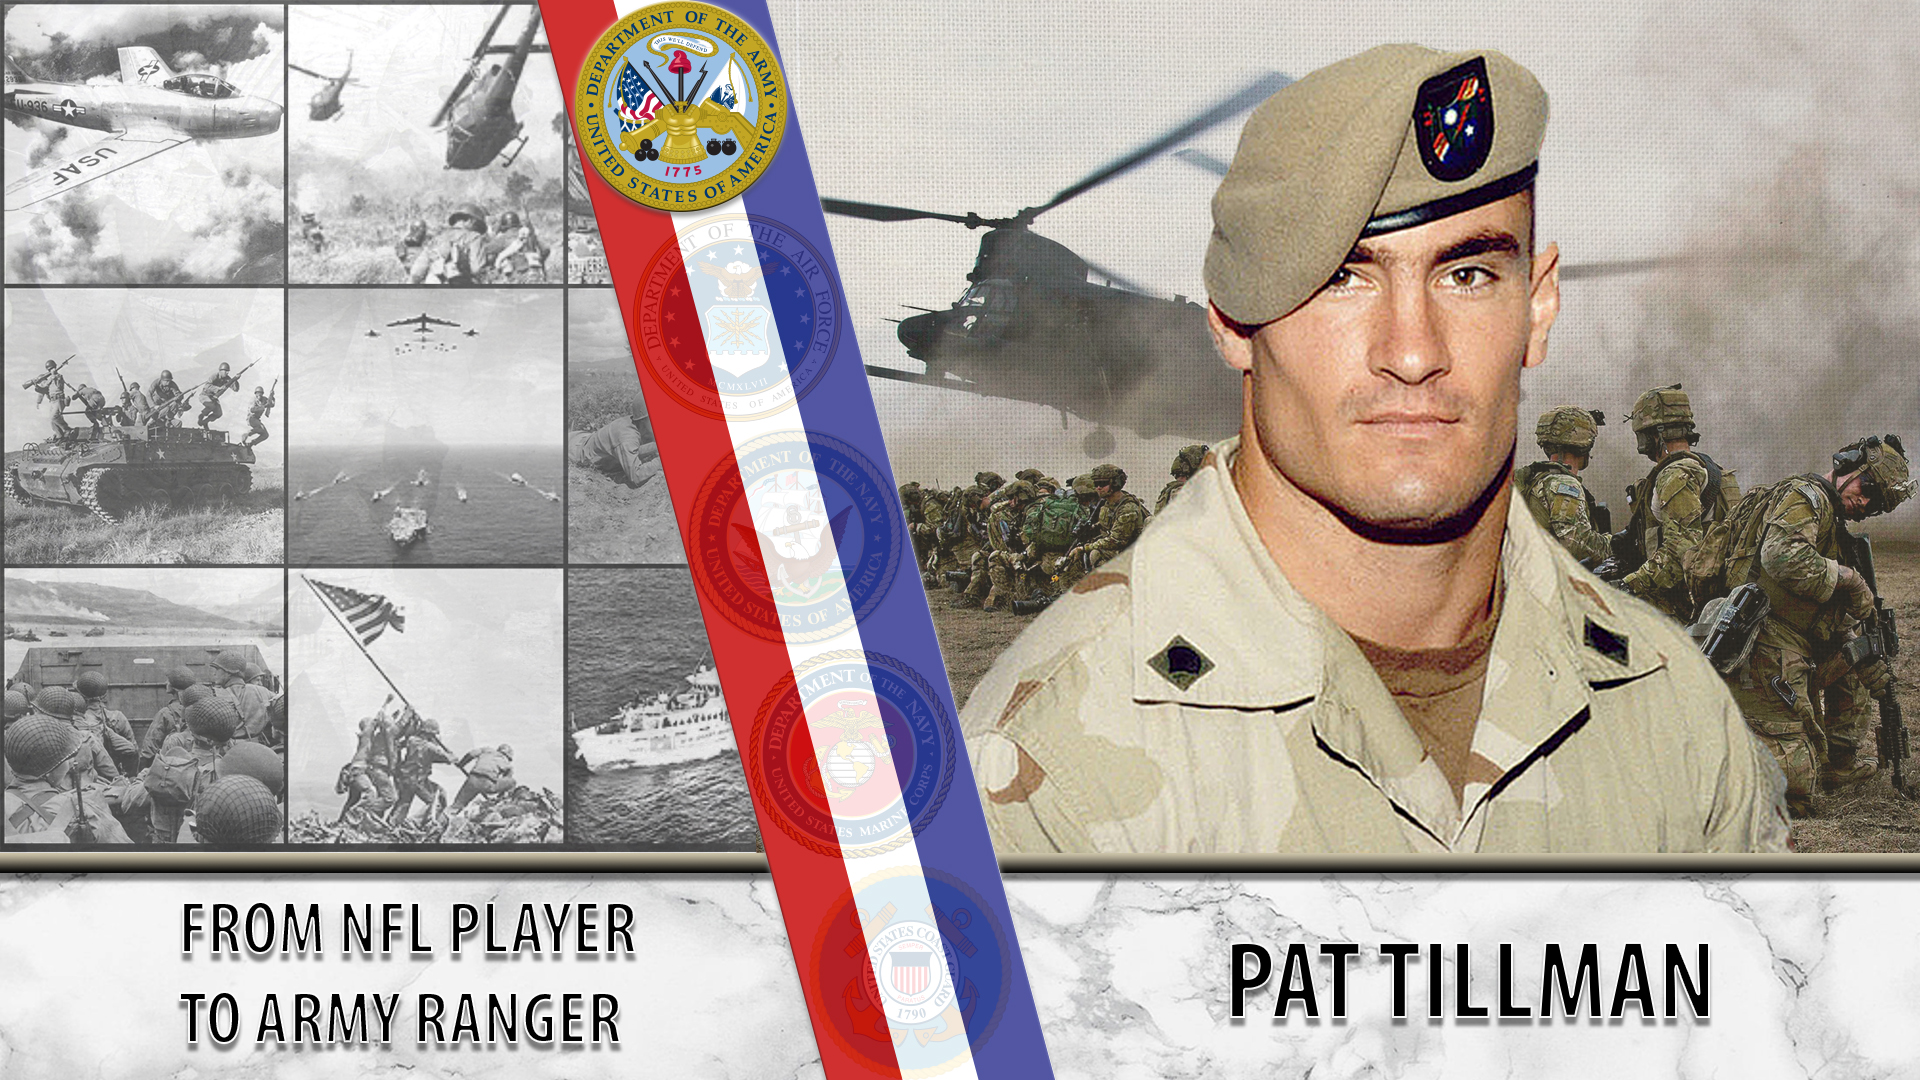 Remembering Pat Tillman, NFL Star Turned Army Ranger